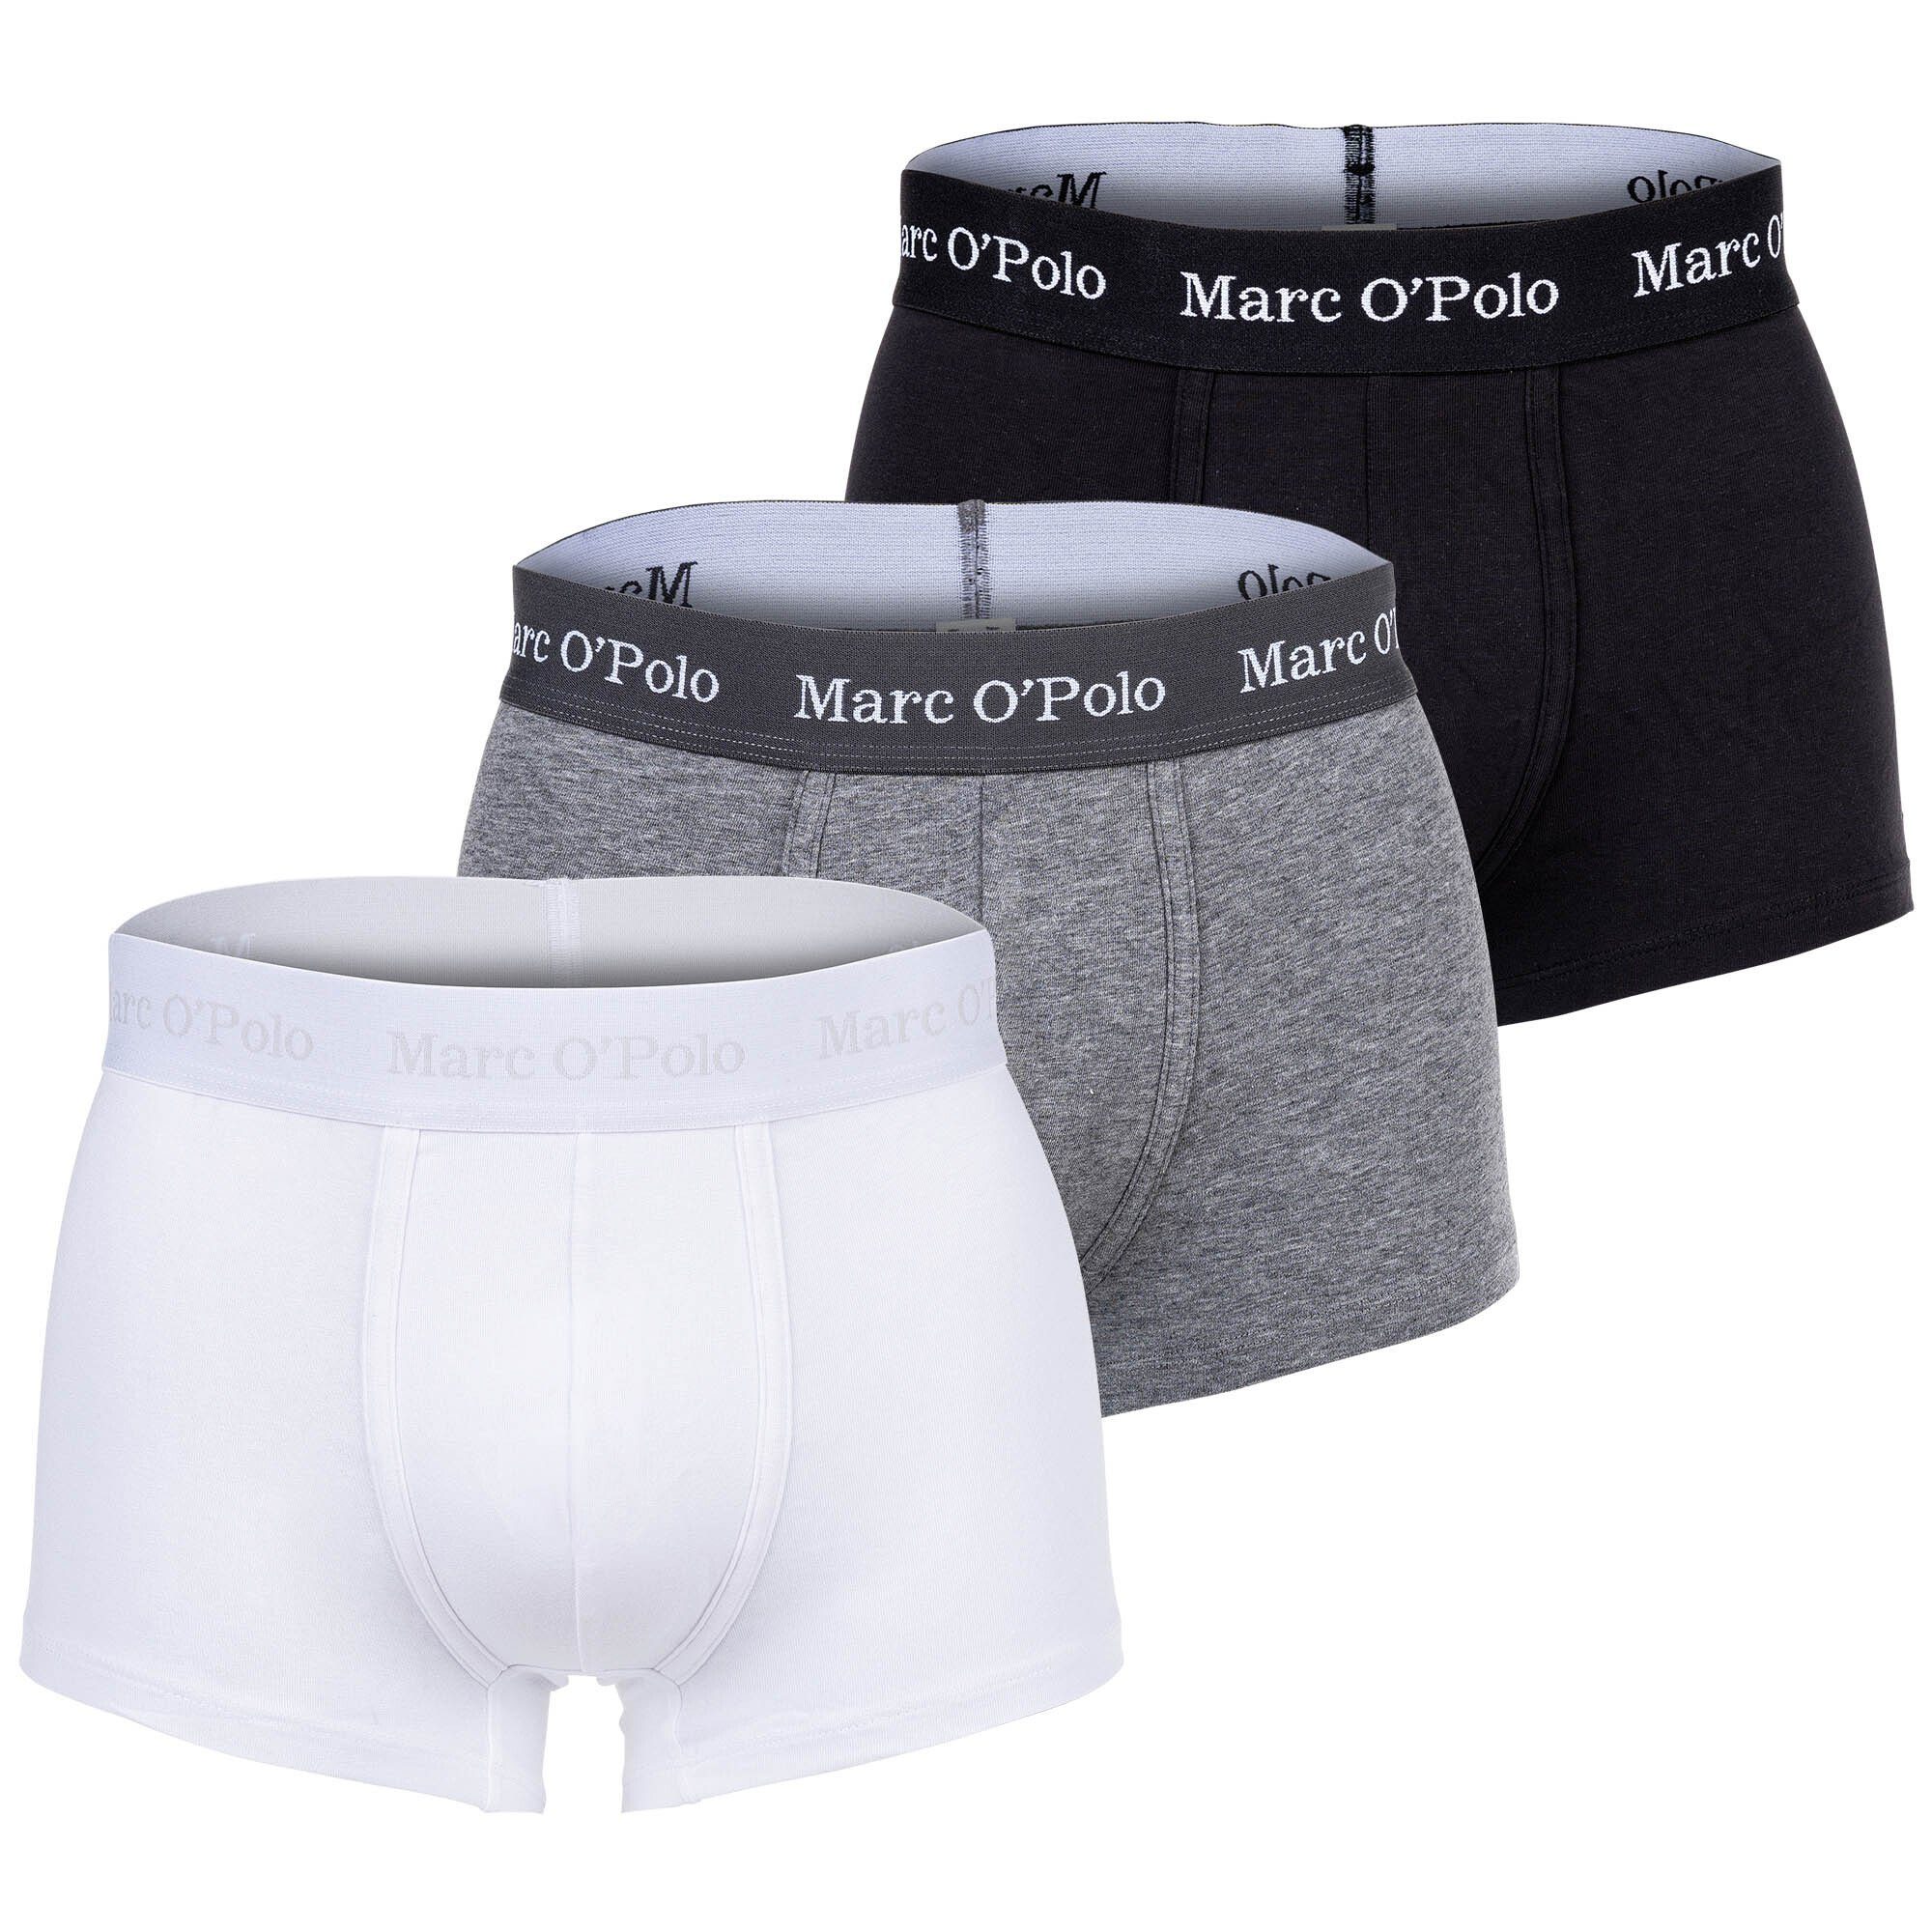 Marc O'Polo Boxer Herren Boxer Shorts, 3er Pack - Trunks, Organic | Boxershorts